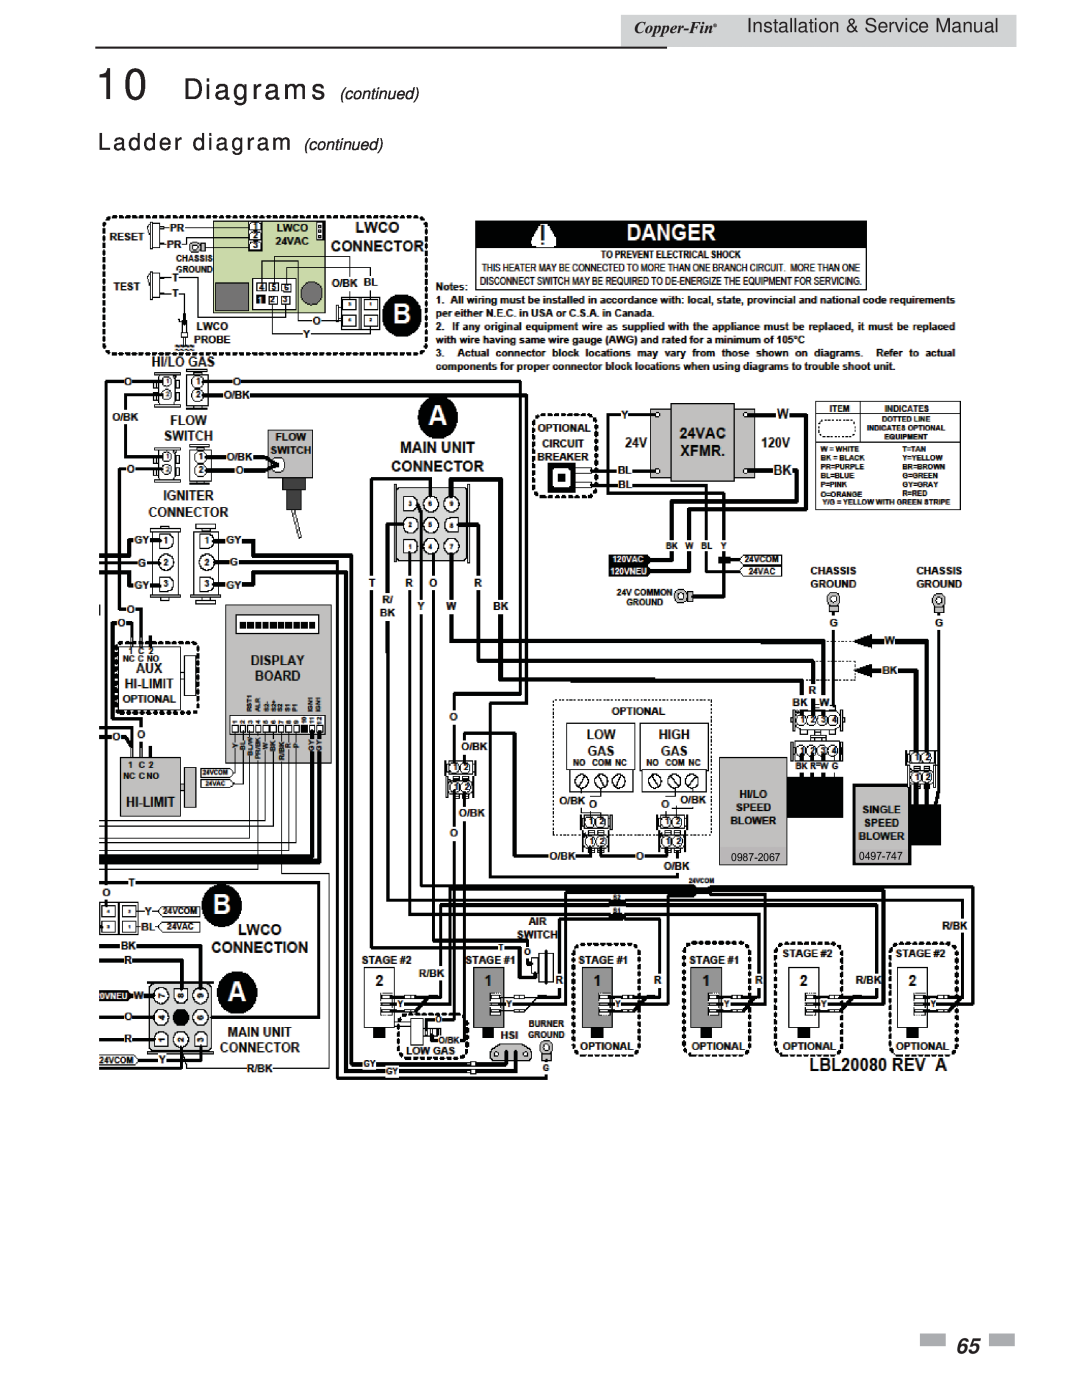 Lochinvar 497 - 2067 service manual Ladder diagram continued, Diagrams continued, 0987-20670497-747 